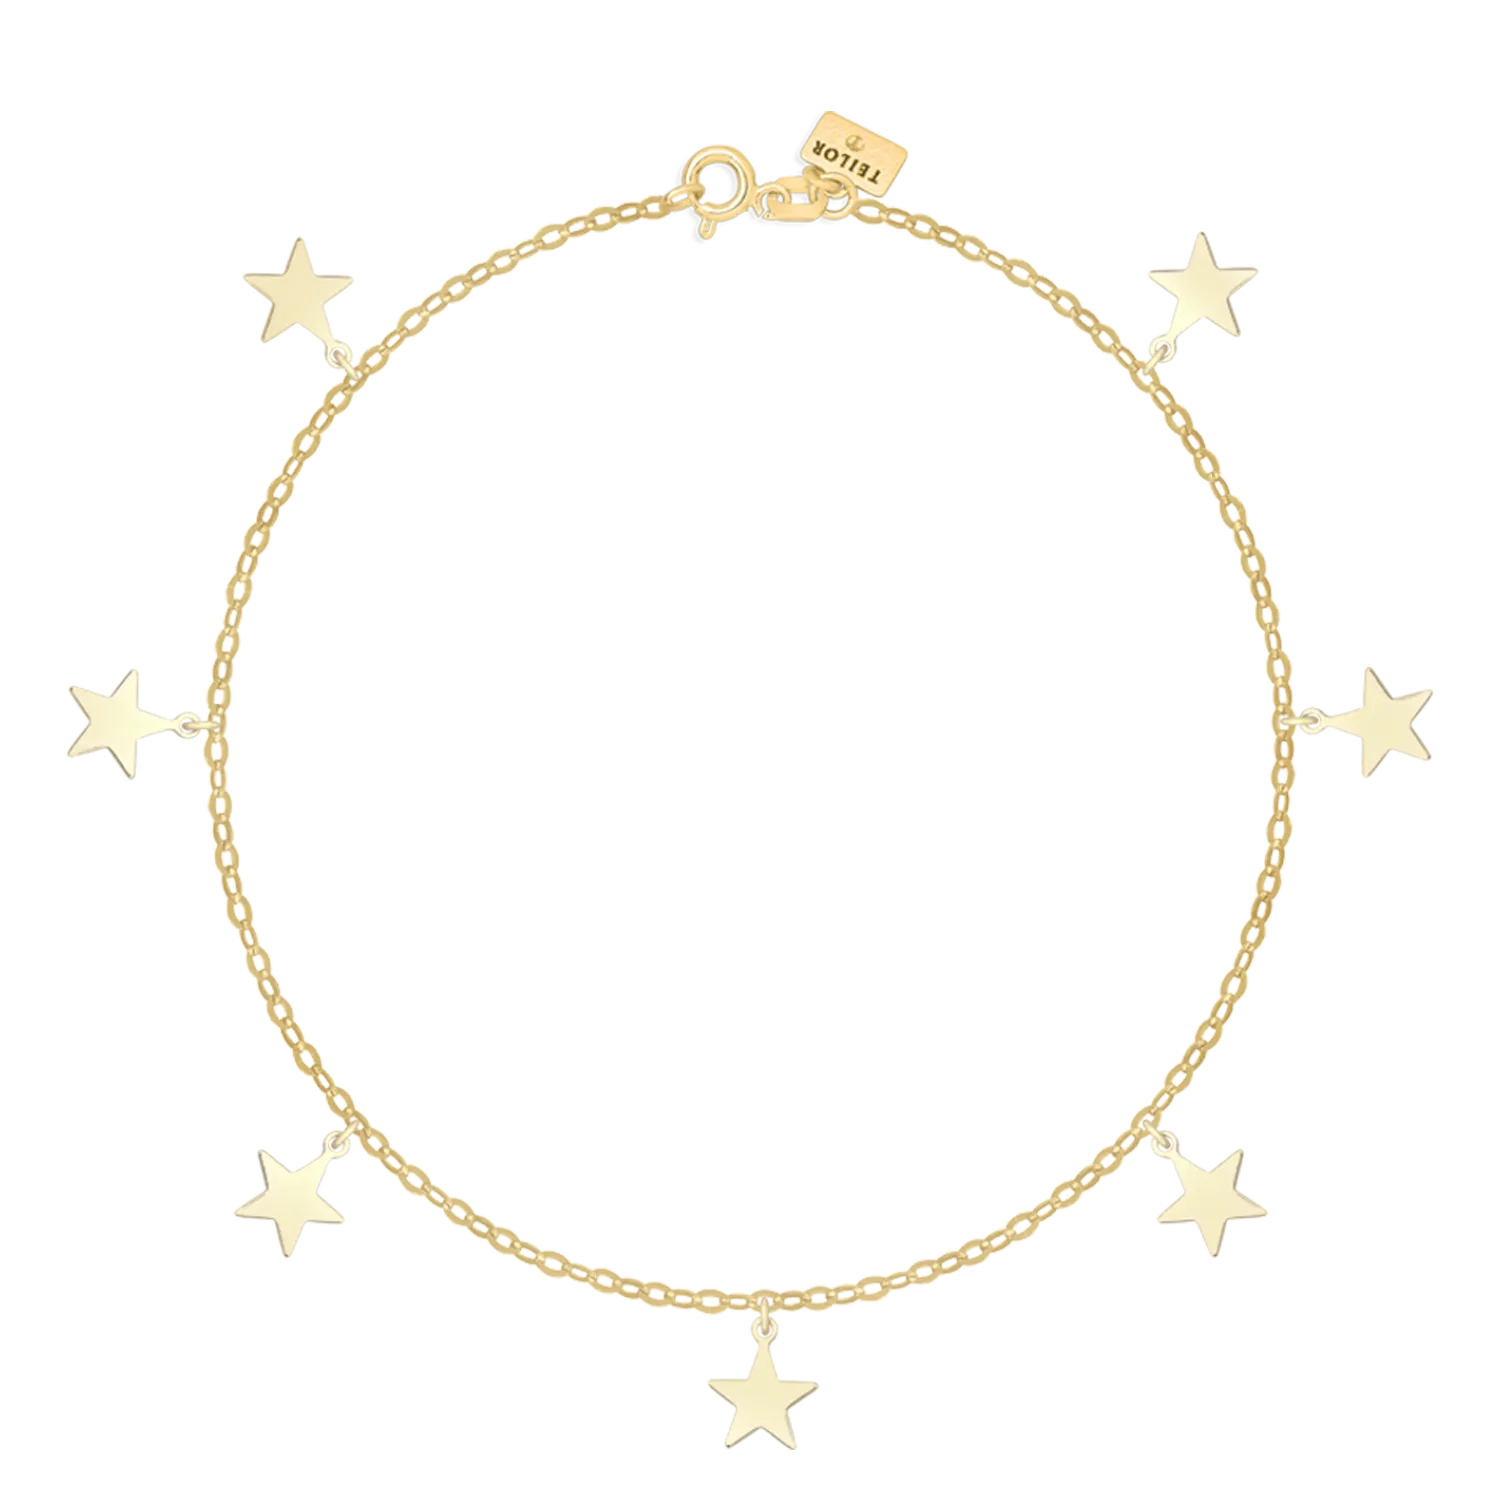 14K yellow gold stars bracelet